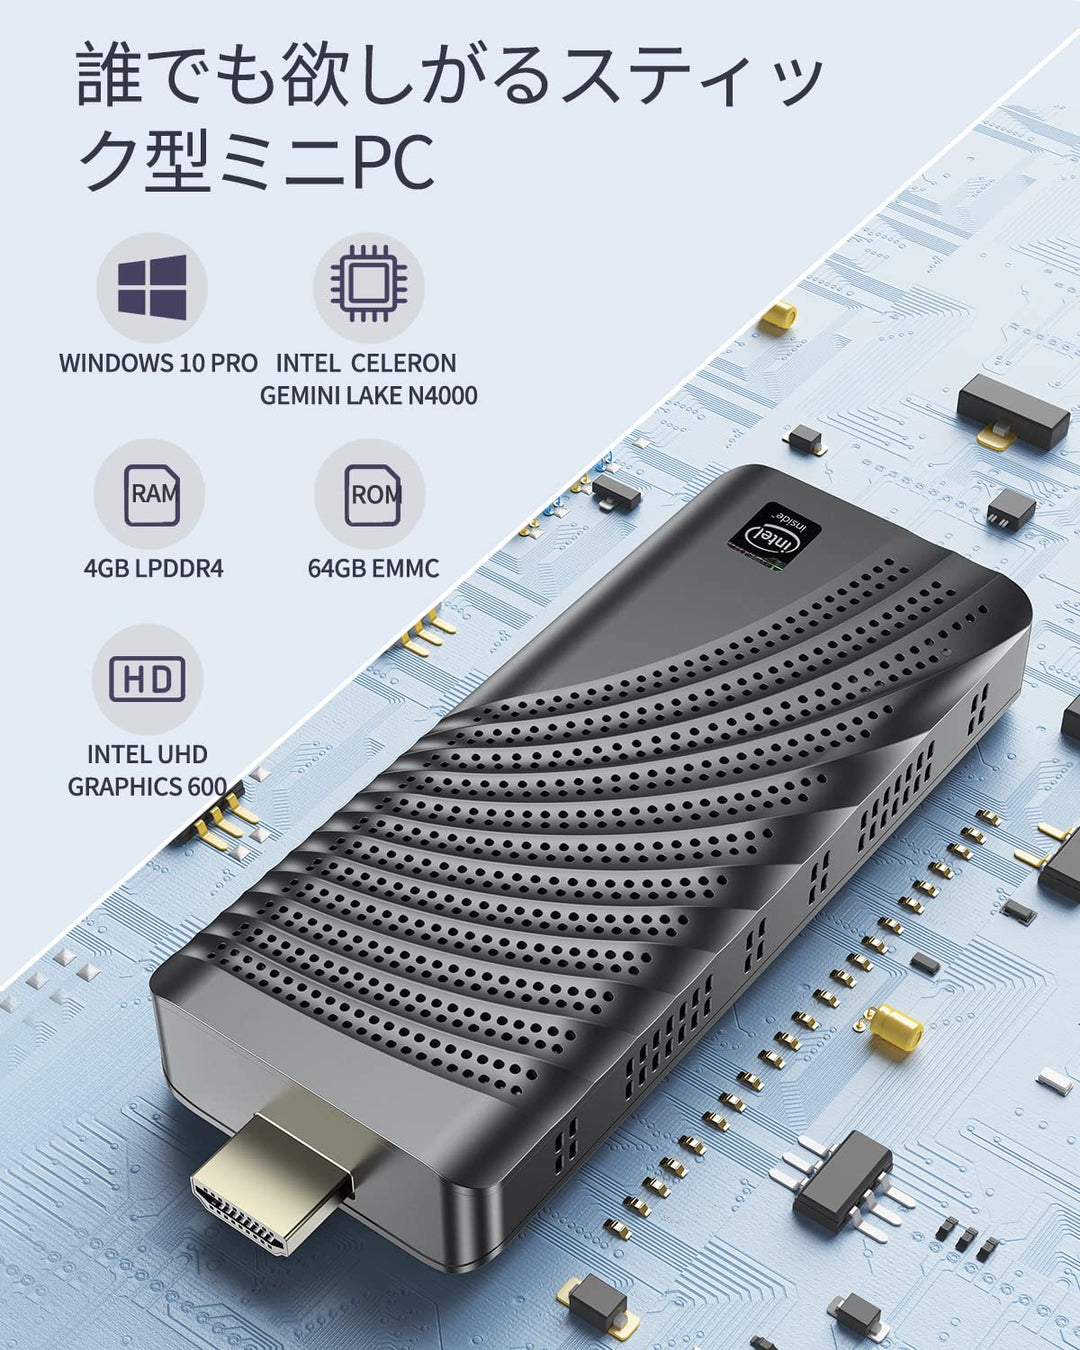 NiPoGi T6P1 スティックpc Windows10 Pro ミニpc インテル Celeron N4000（最大2.6GHz）mini pc 4GB DDR4 64GB eMMC ミニパソコン 4K HDMI 自動電源オン 2.4G / 5G WiFi Bluetooth4.2 ポケットサイズ 軽量 省電力 小型pc